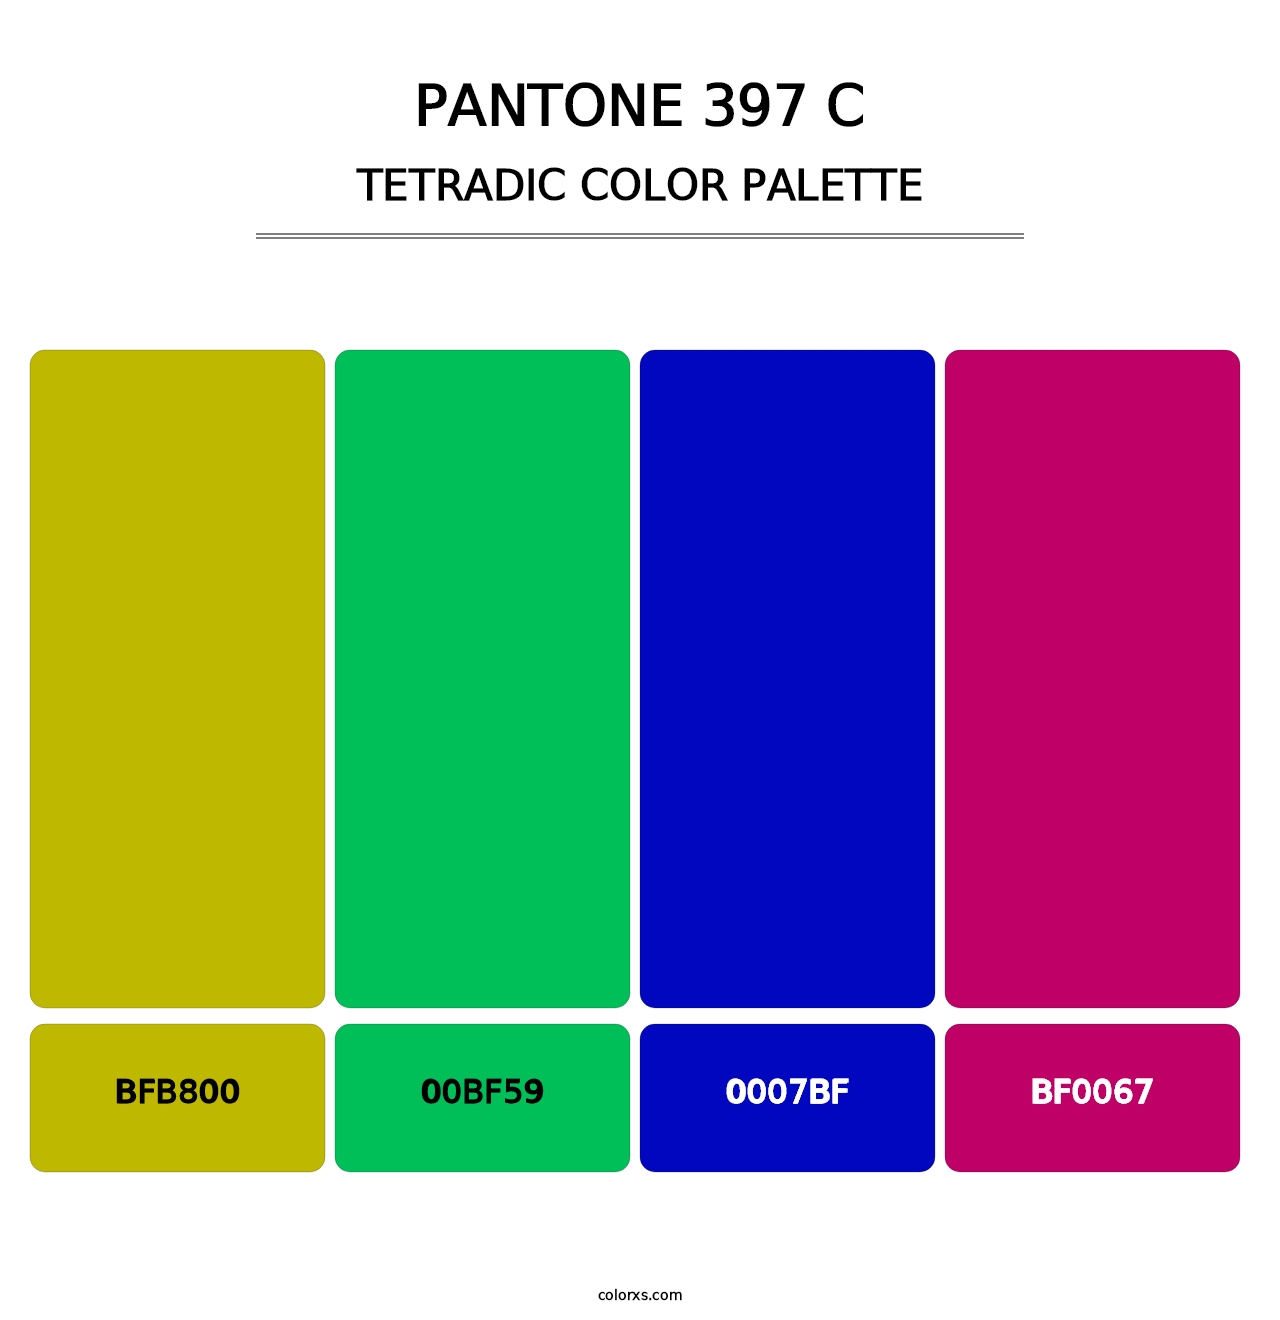 PANTONE 397 C - Tetradic Color Palette